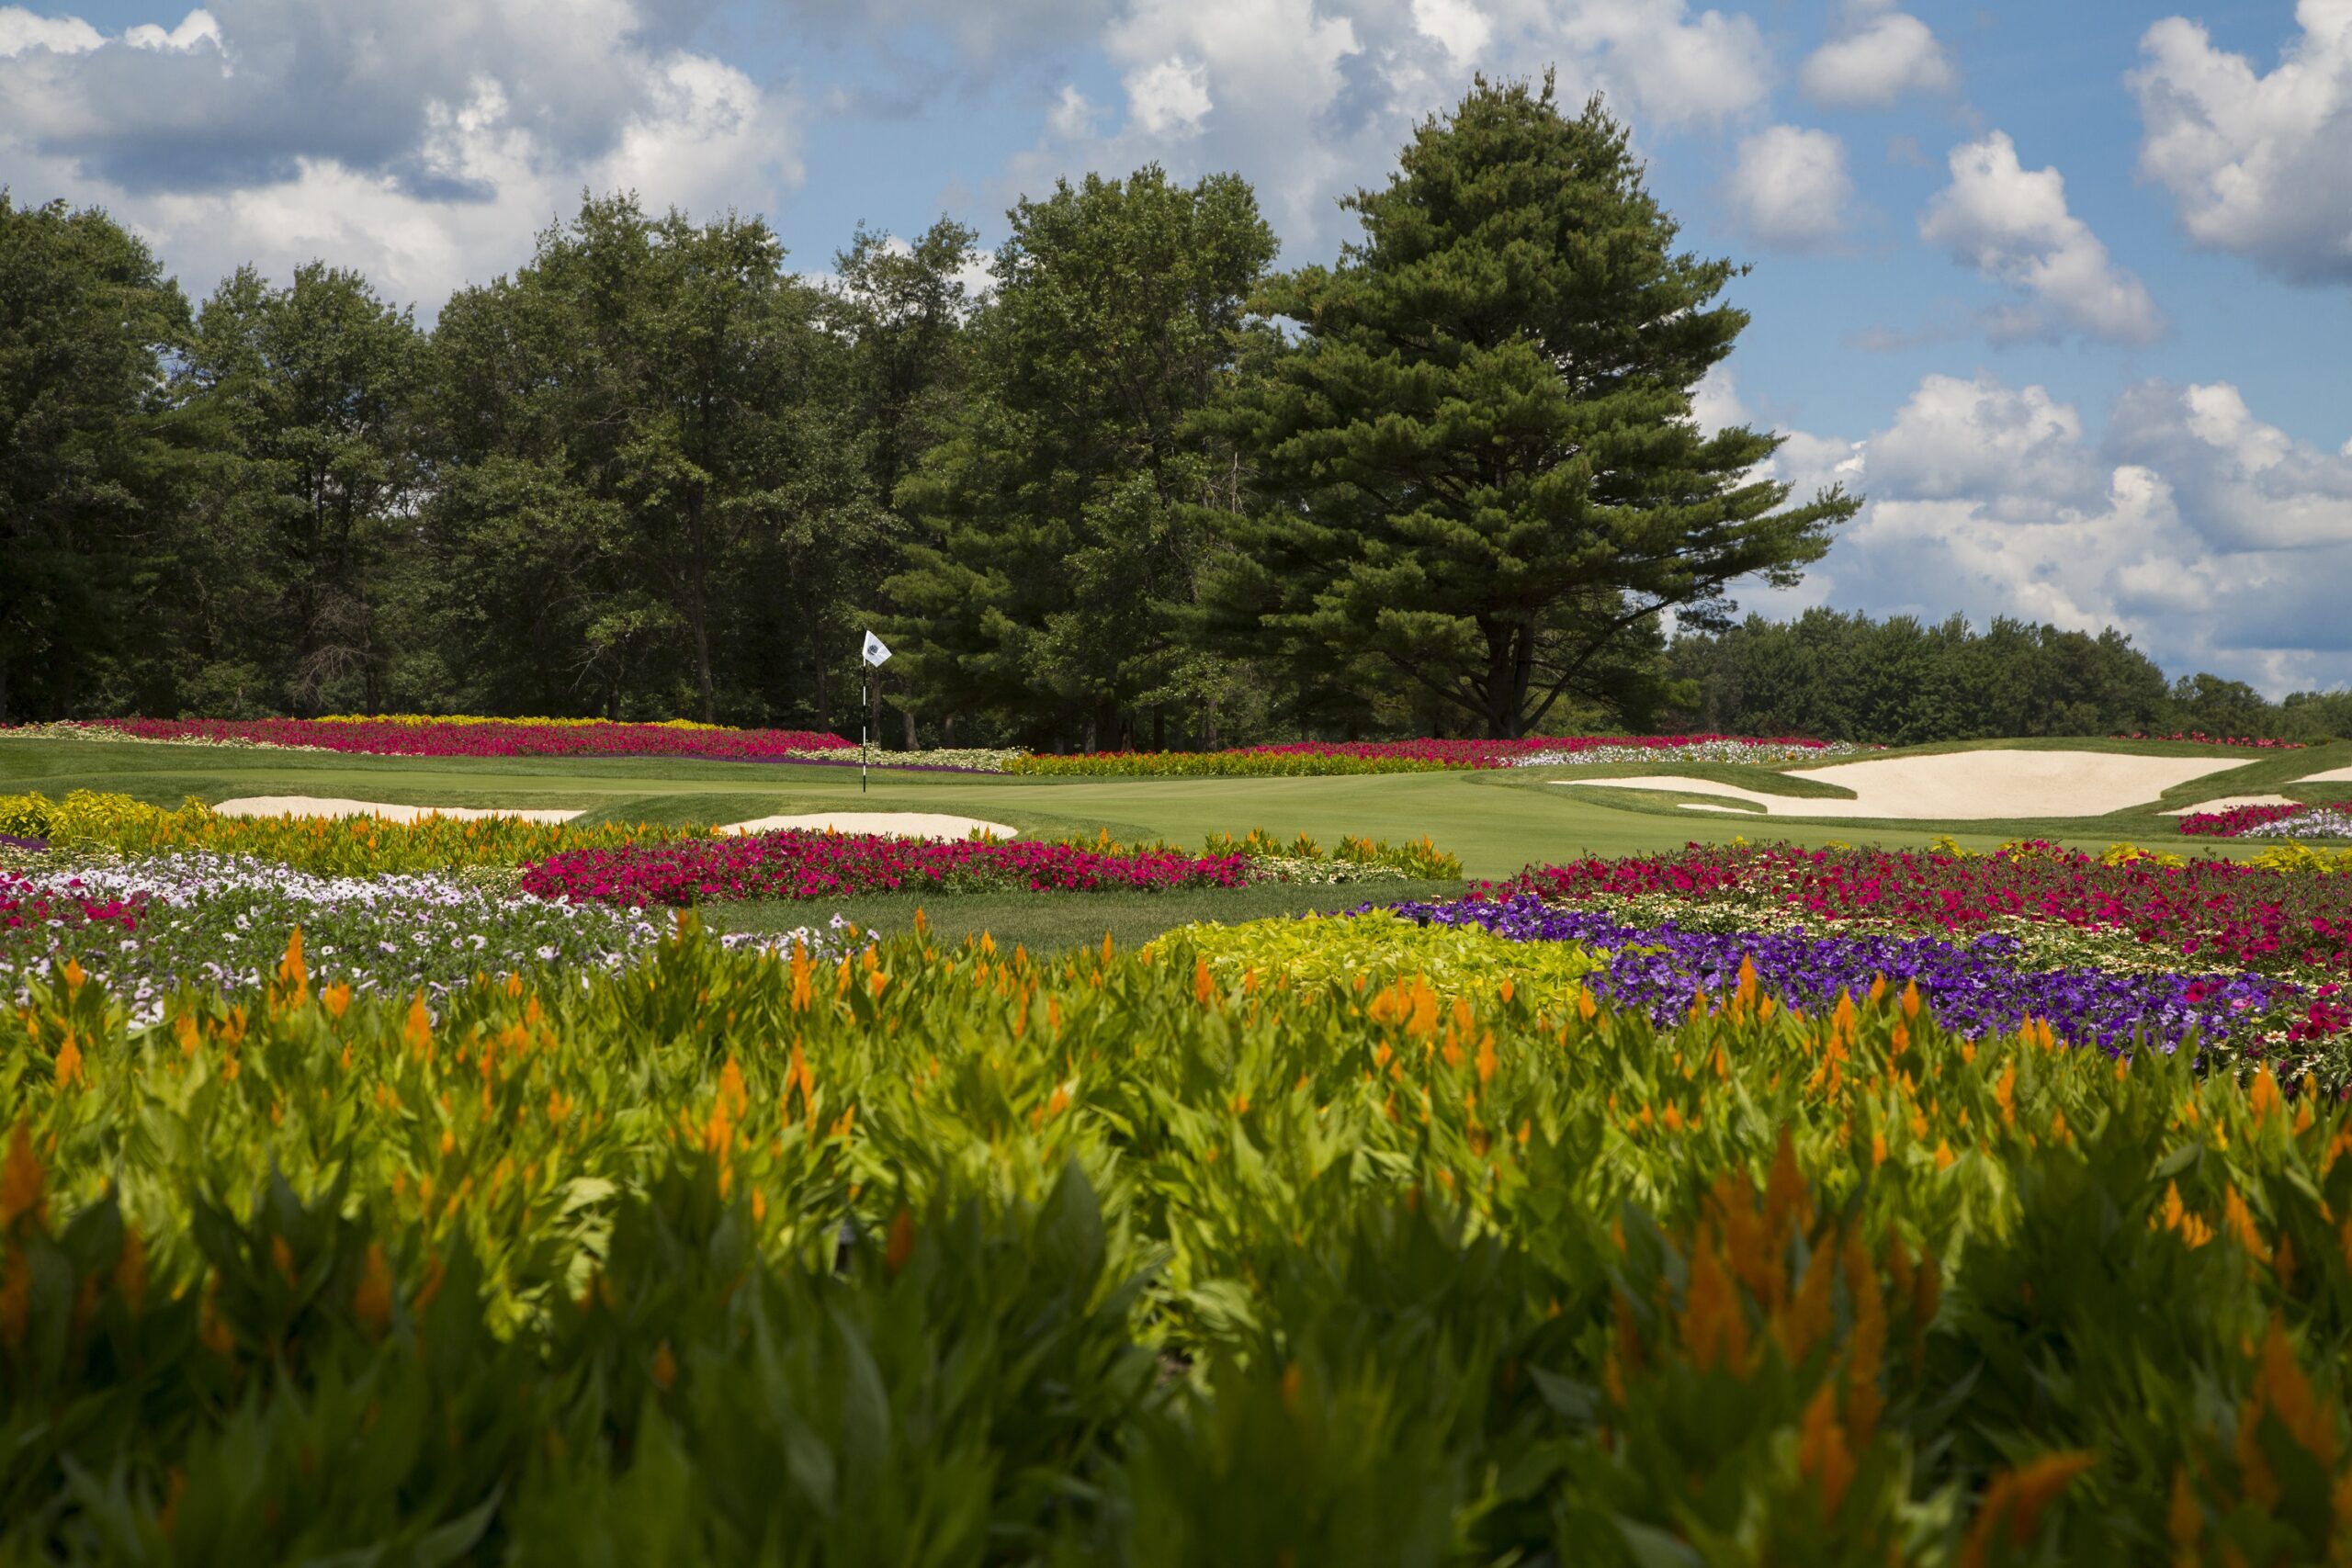 Stevens Point Golf Course To Host USGA’s 2023 Senior Open, Event With Estimated $20M Economic Impact